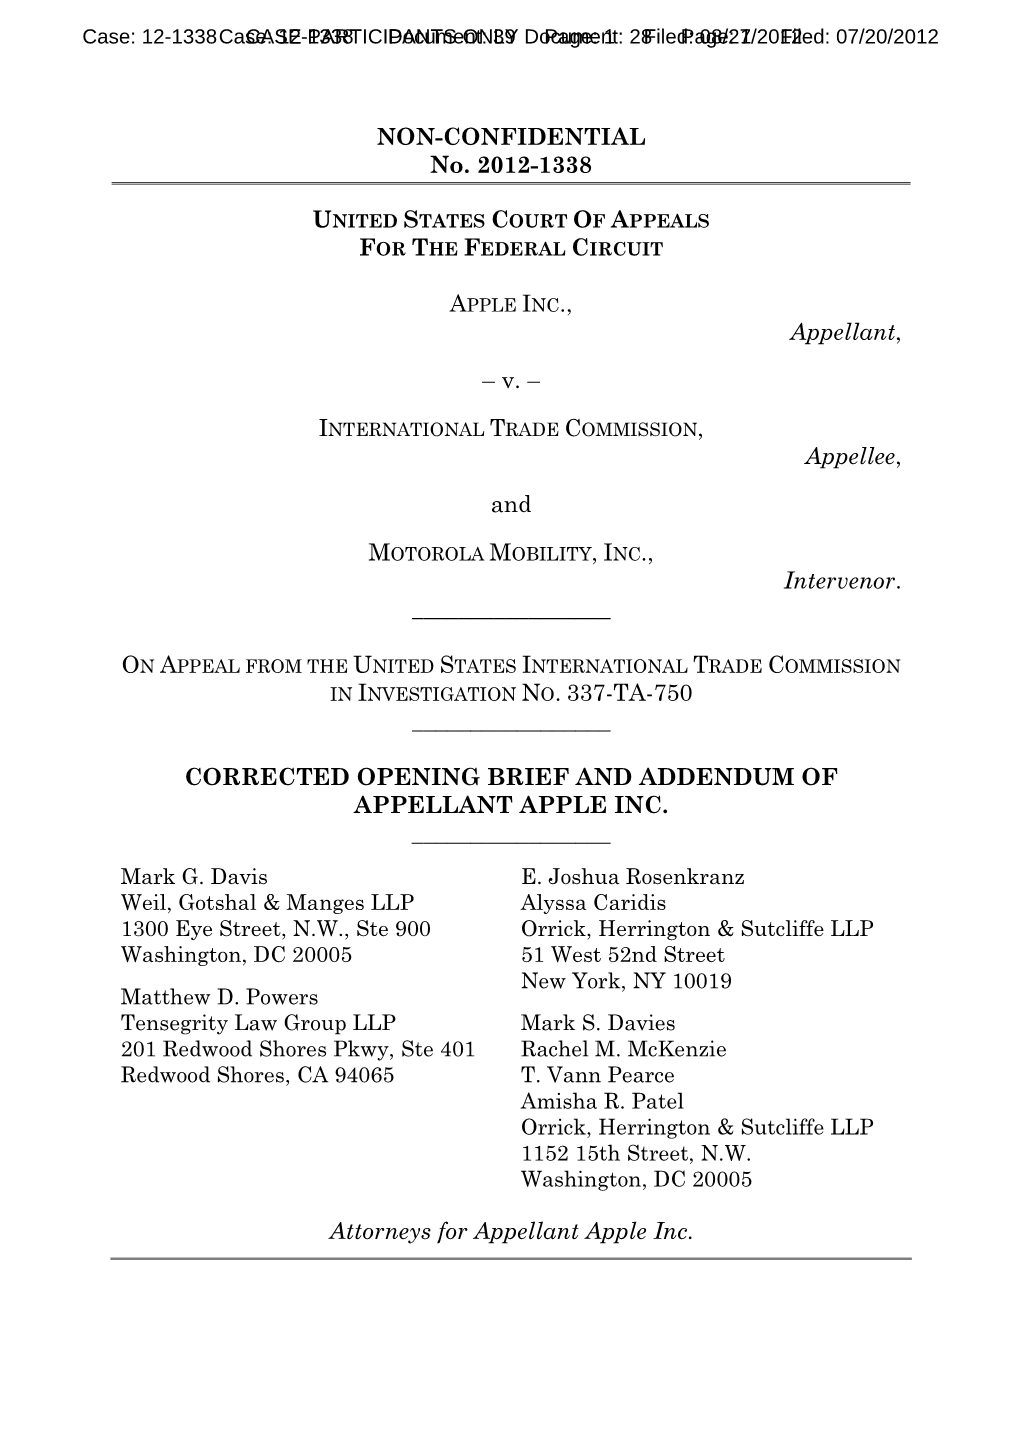 Corrected Opening Brief and Addendum of Appellant Apple Inc